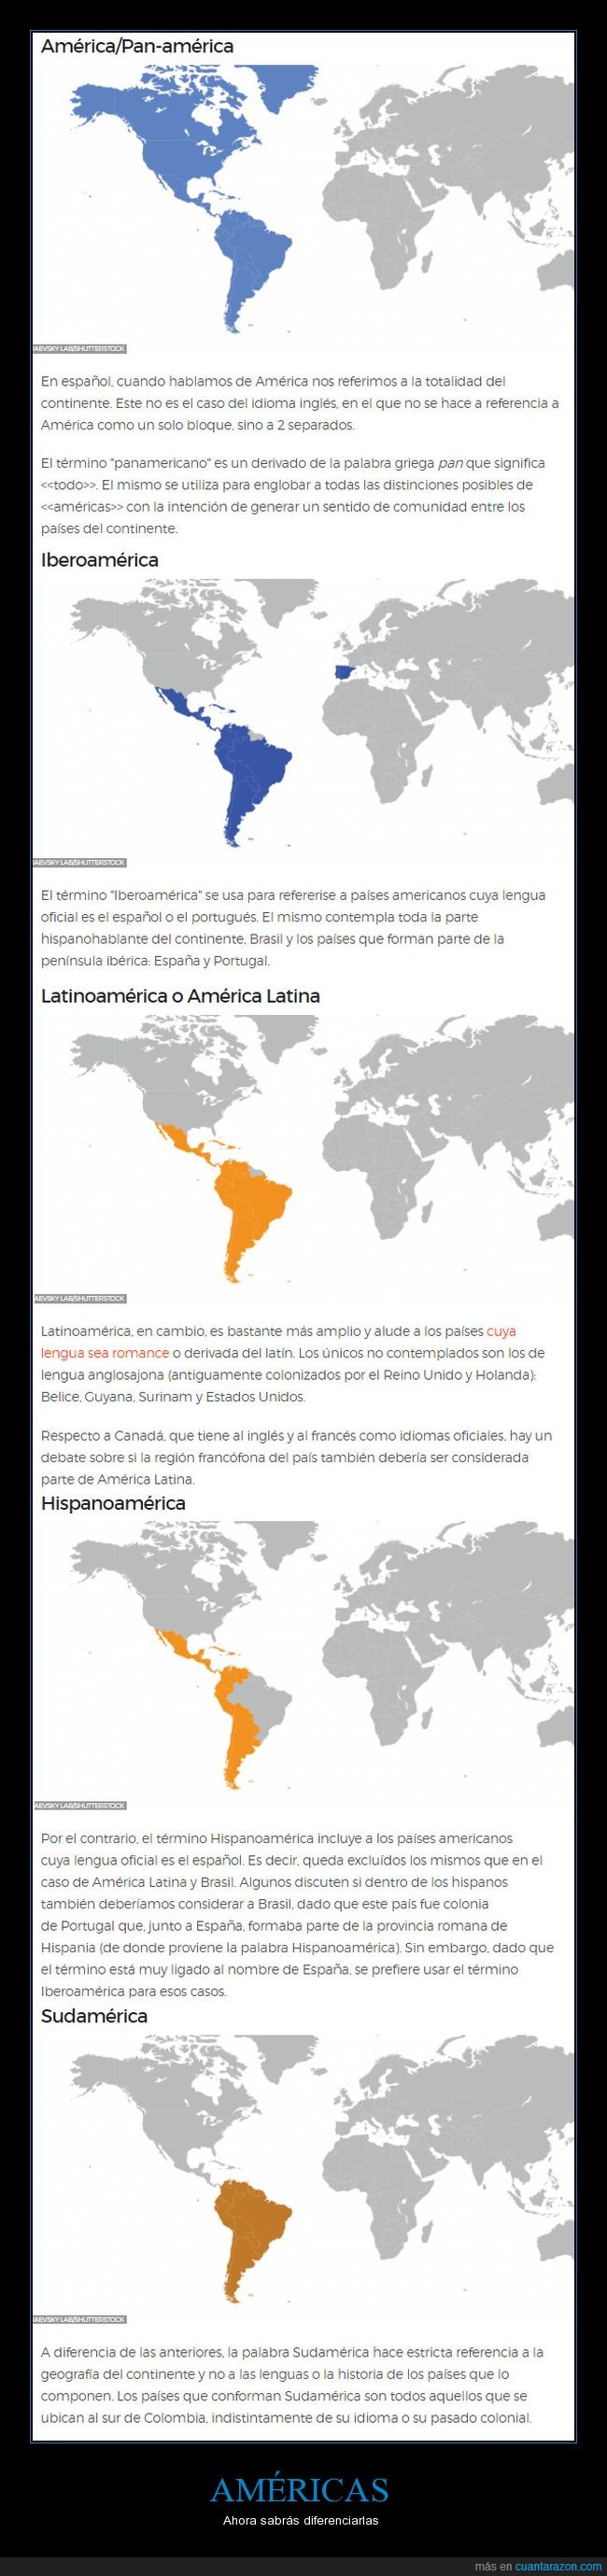 América,Latinoamérica,Iberoamérica,Panamérica,Hispanoamérica,Sudamérica,portugués,español